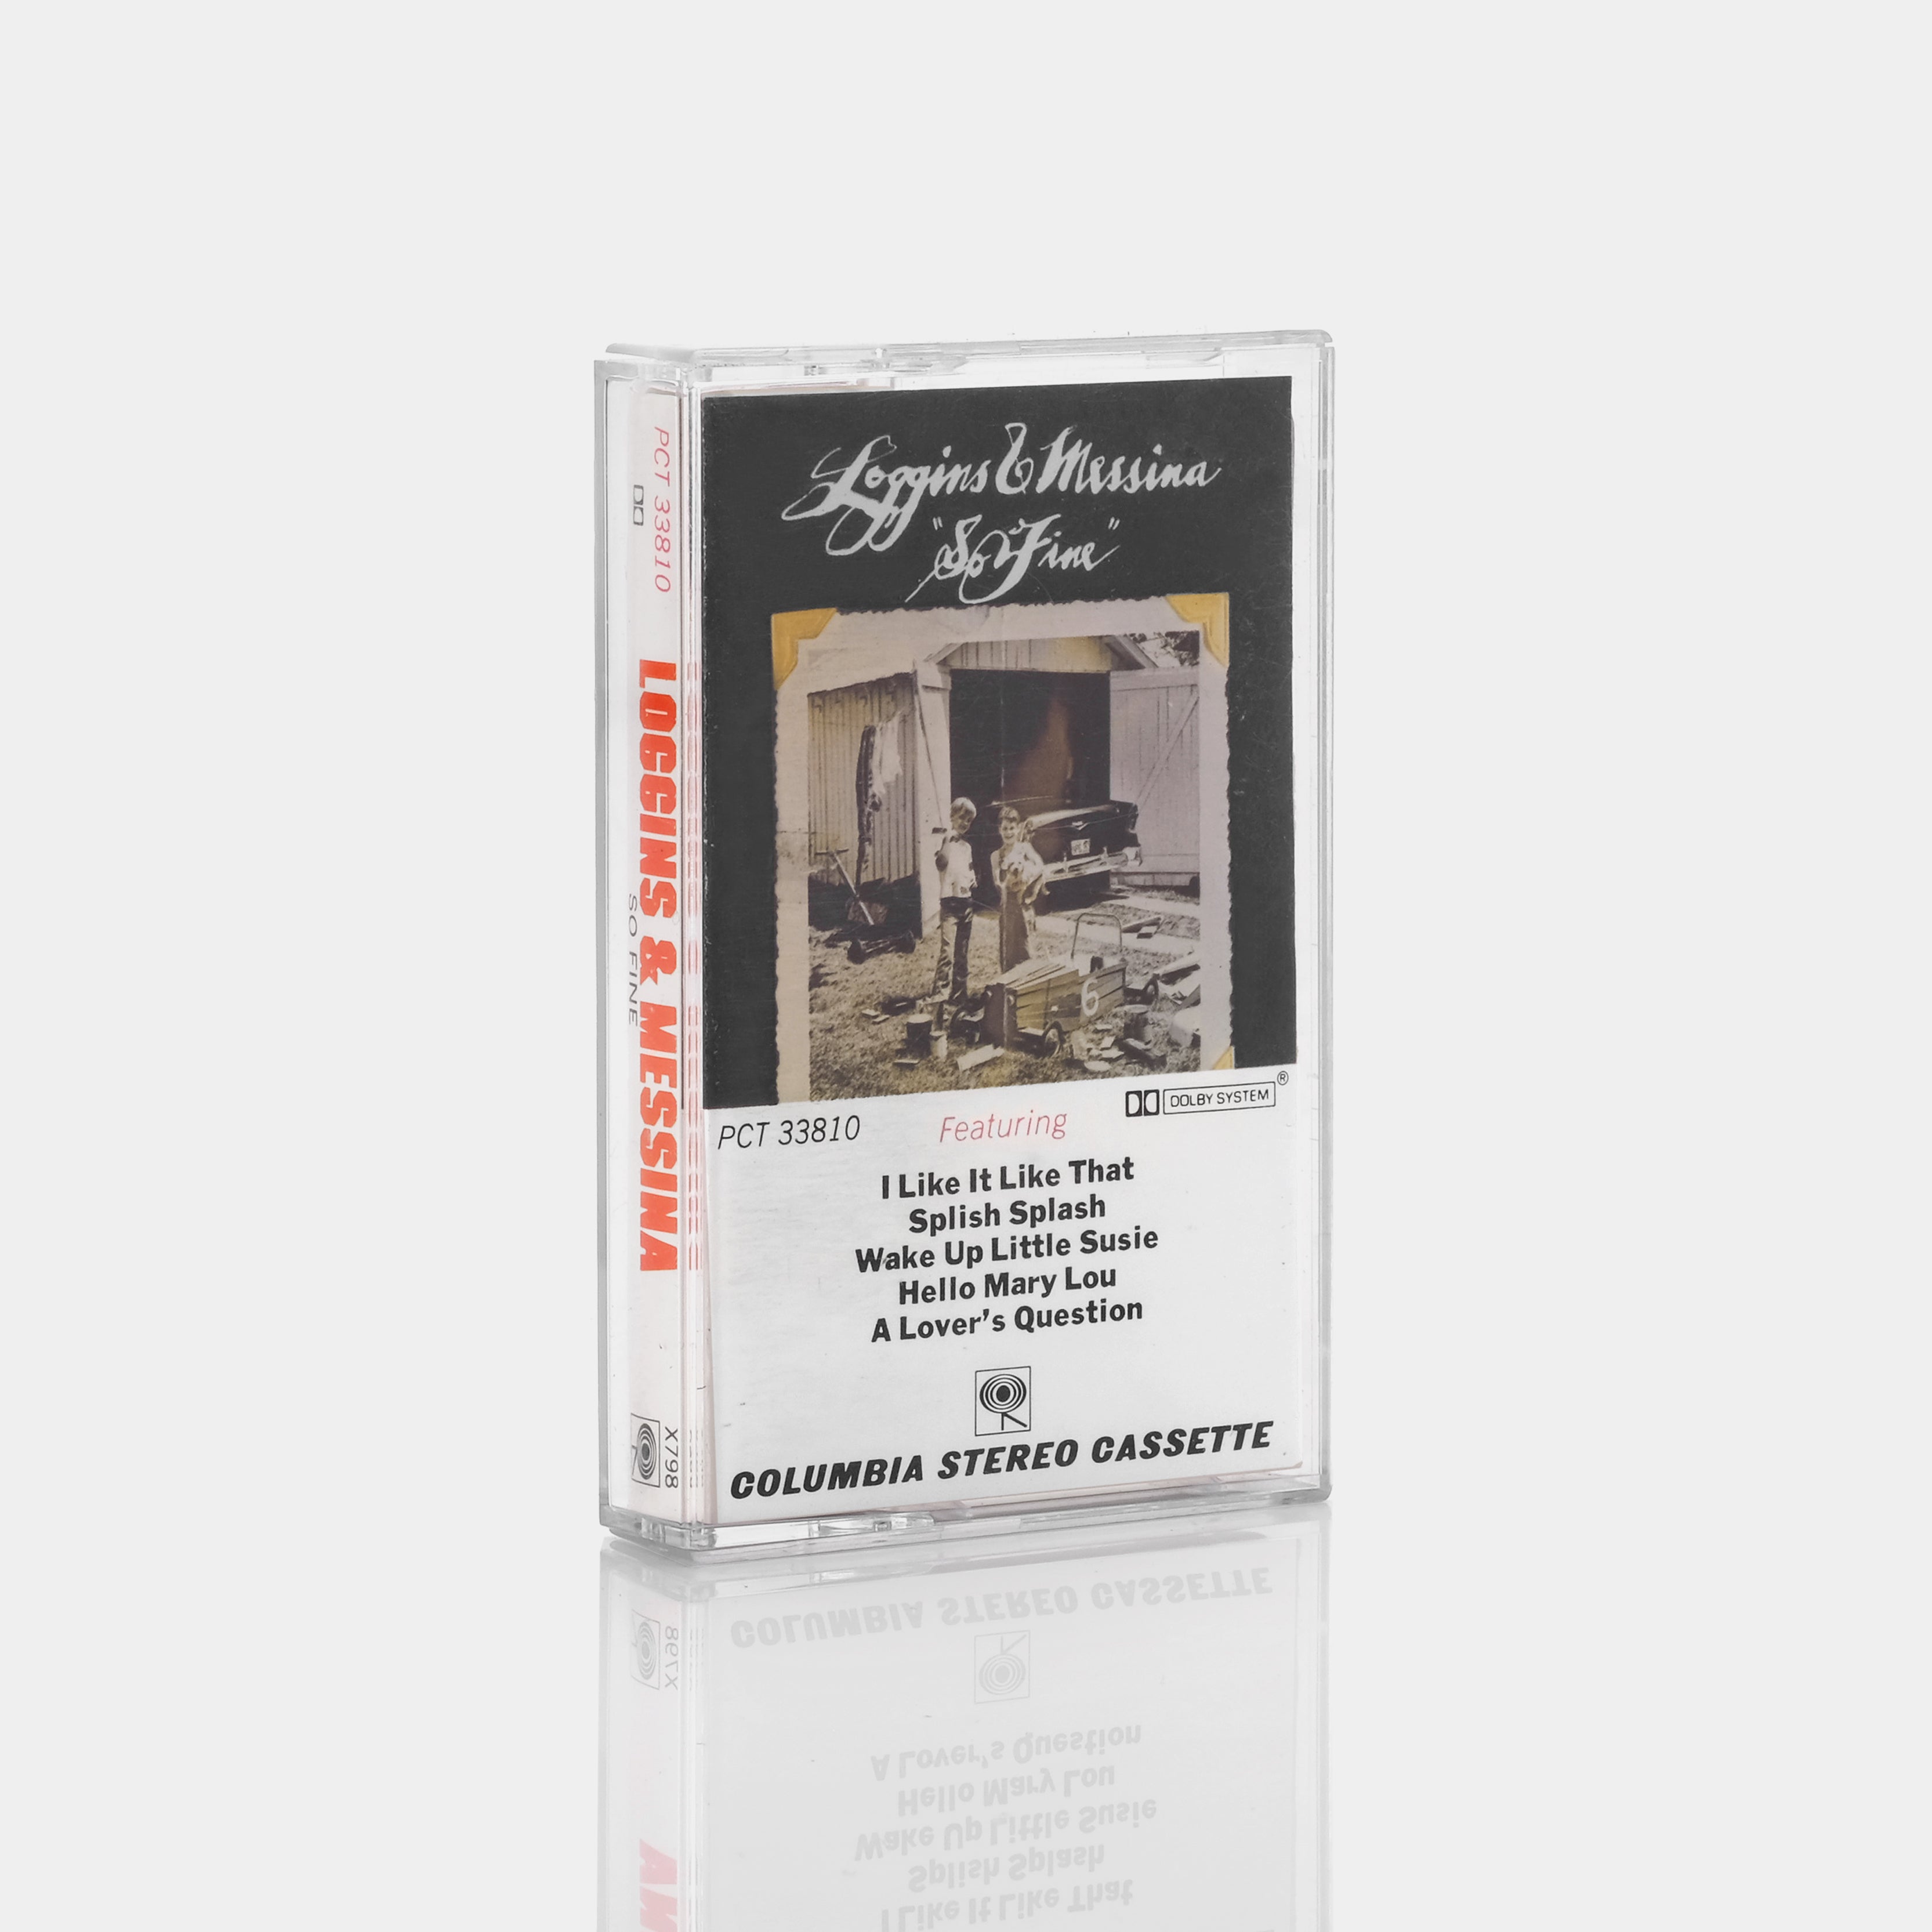 Loggins & Messina - So Fine Cassette Tape